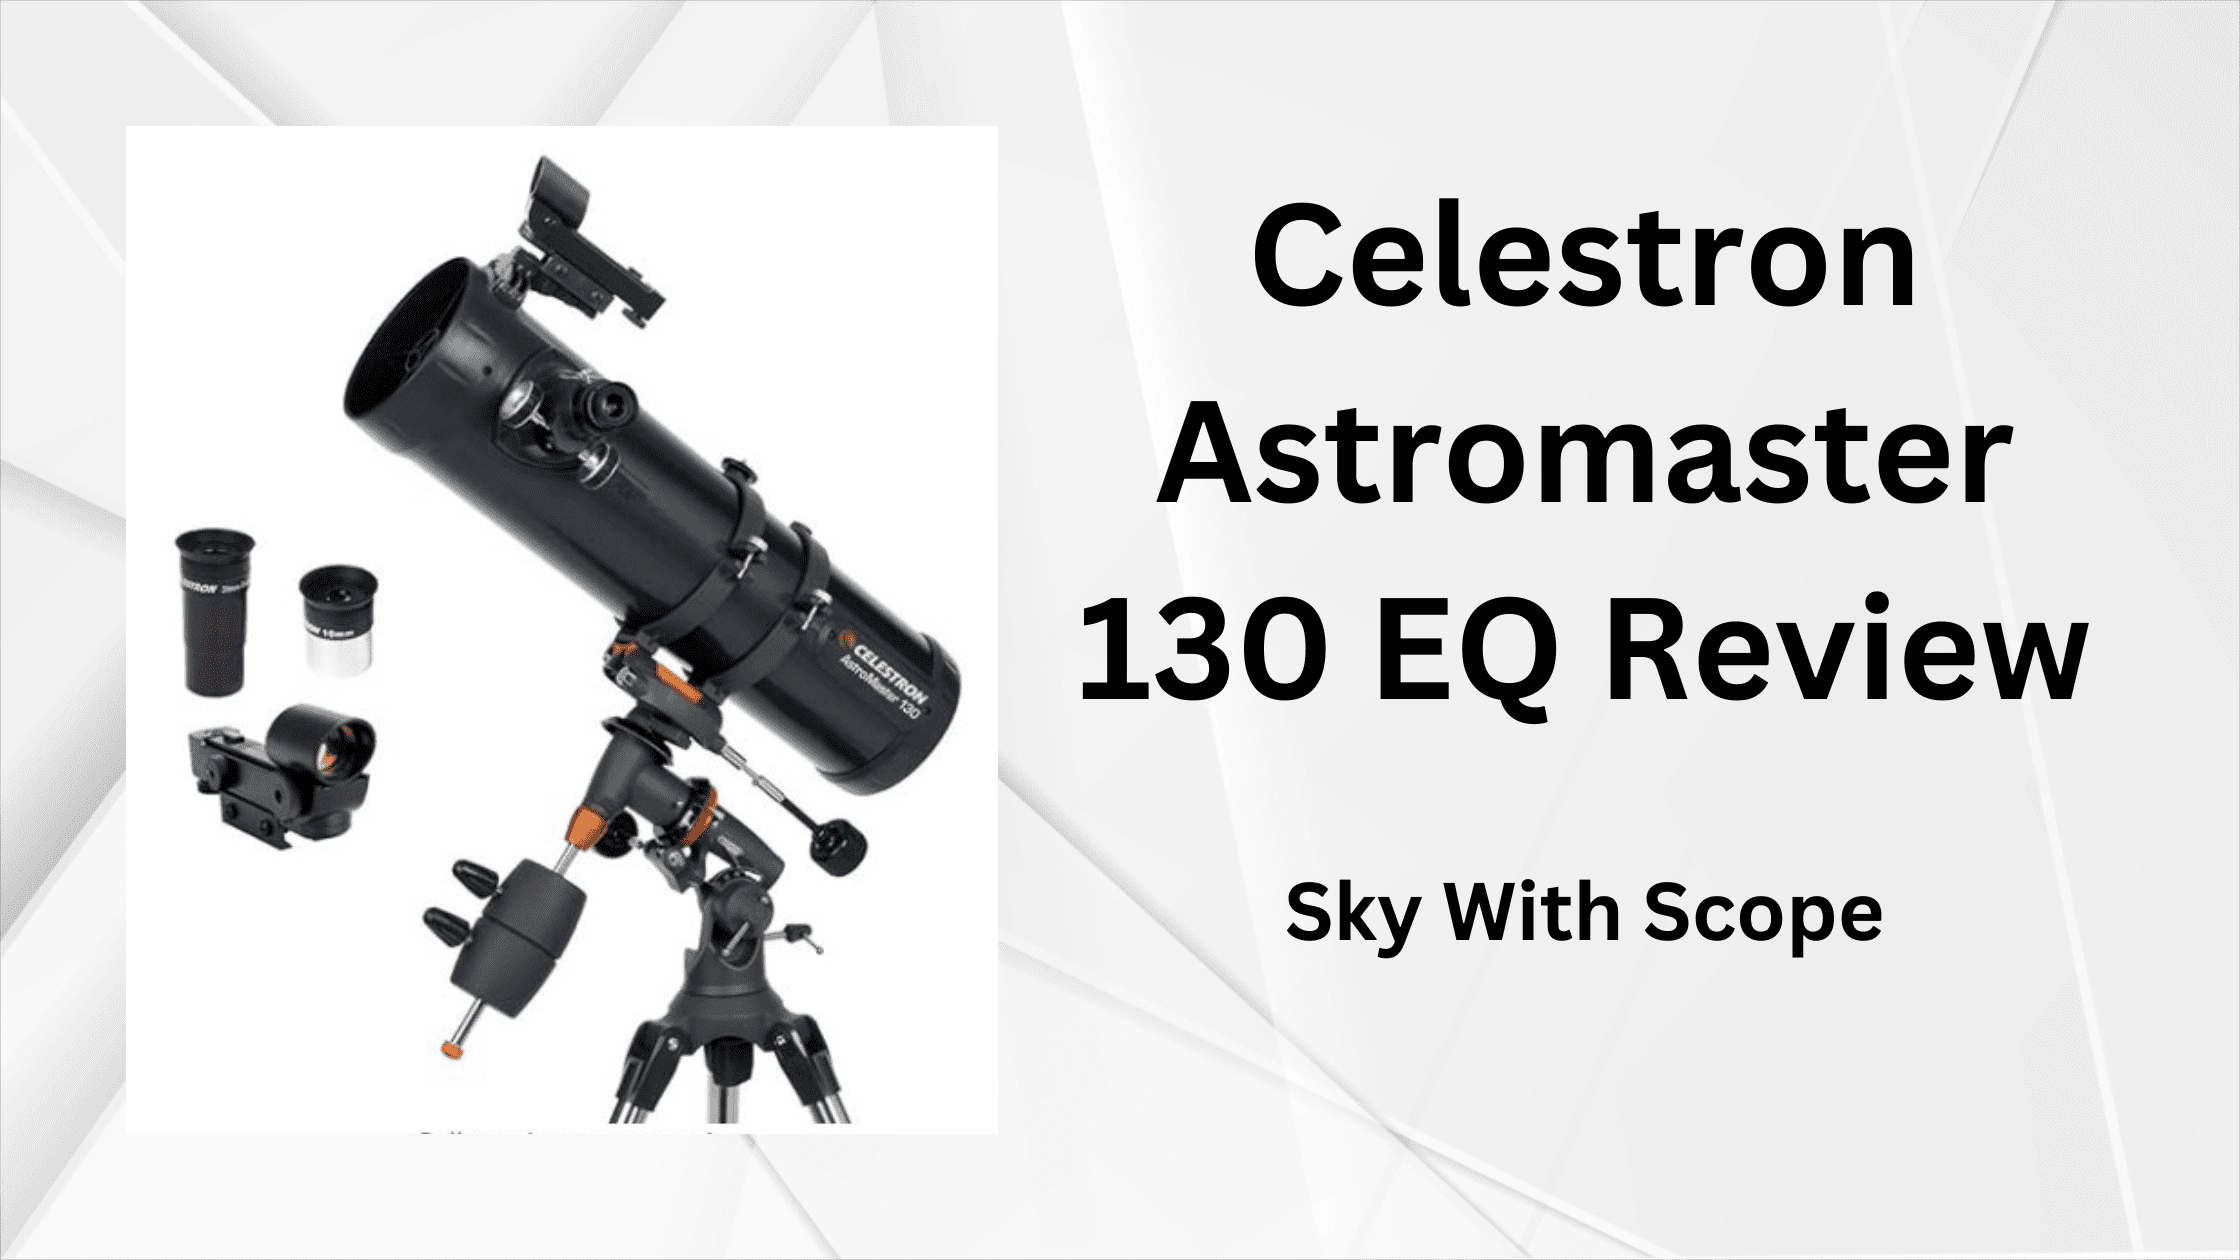 Celestron astromaster 130eq review